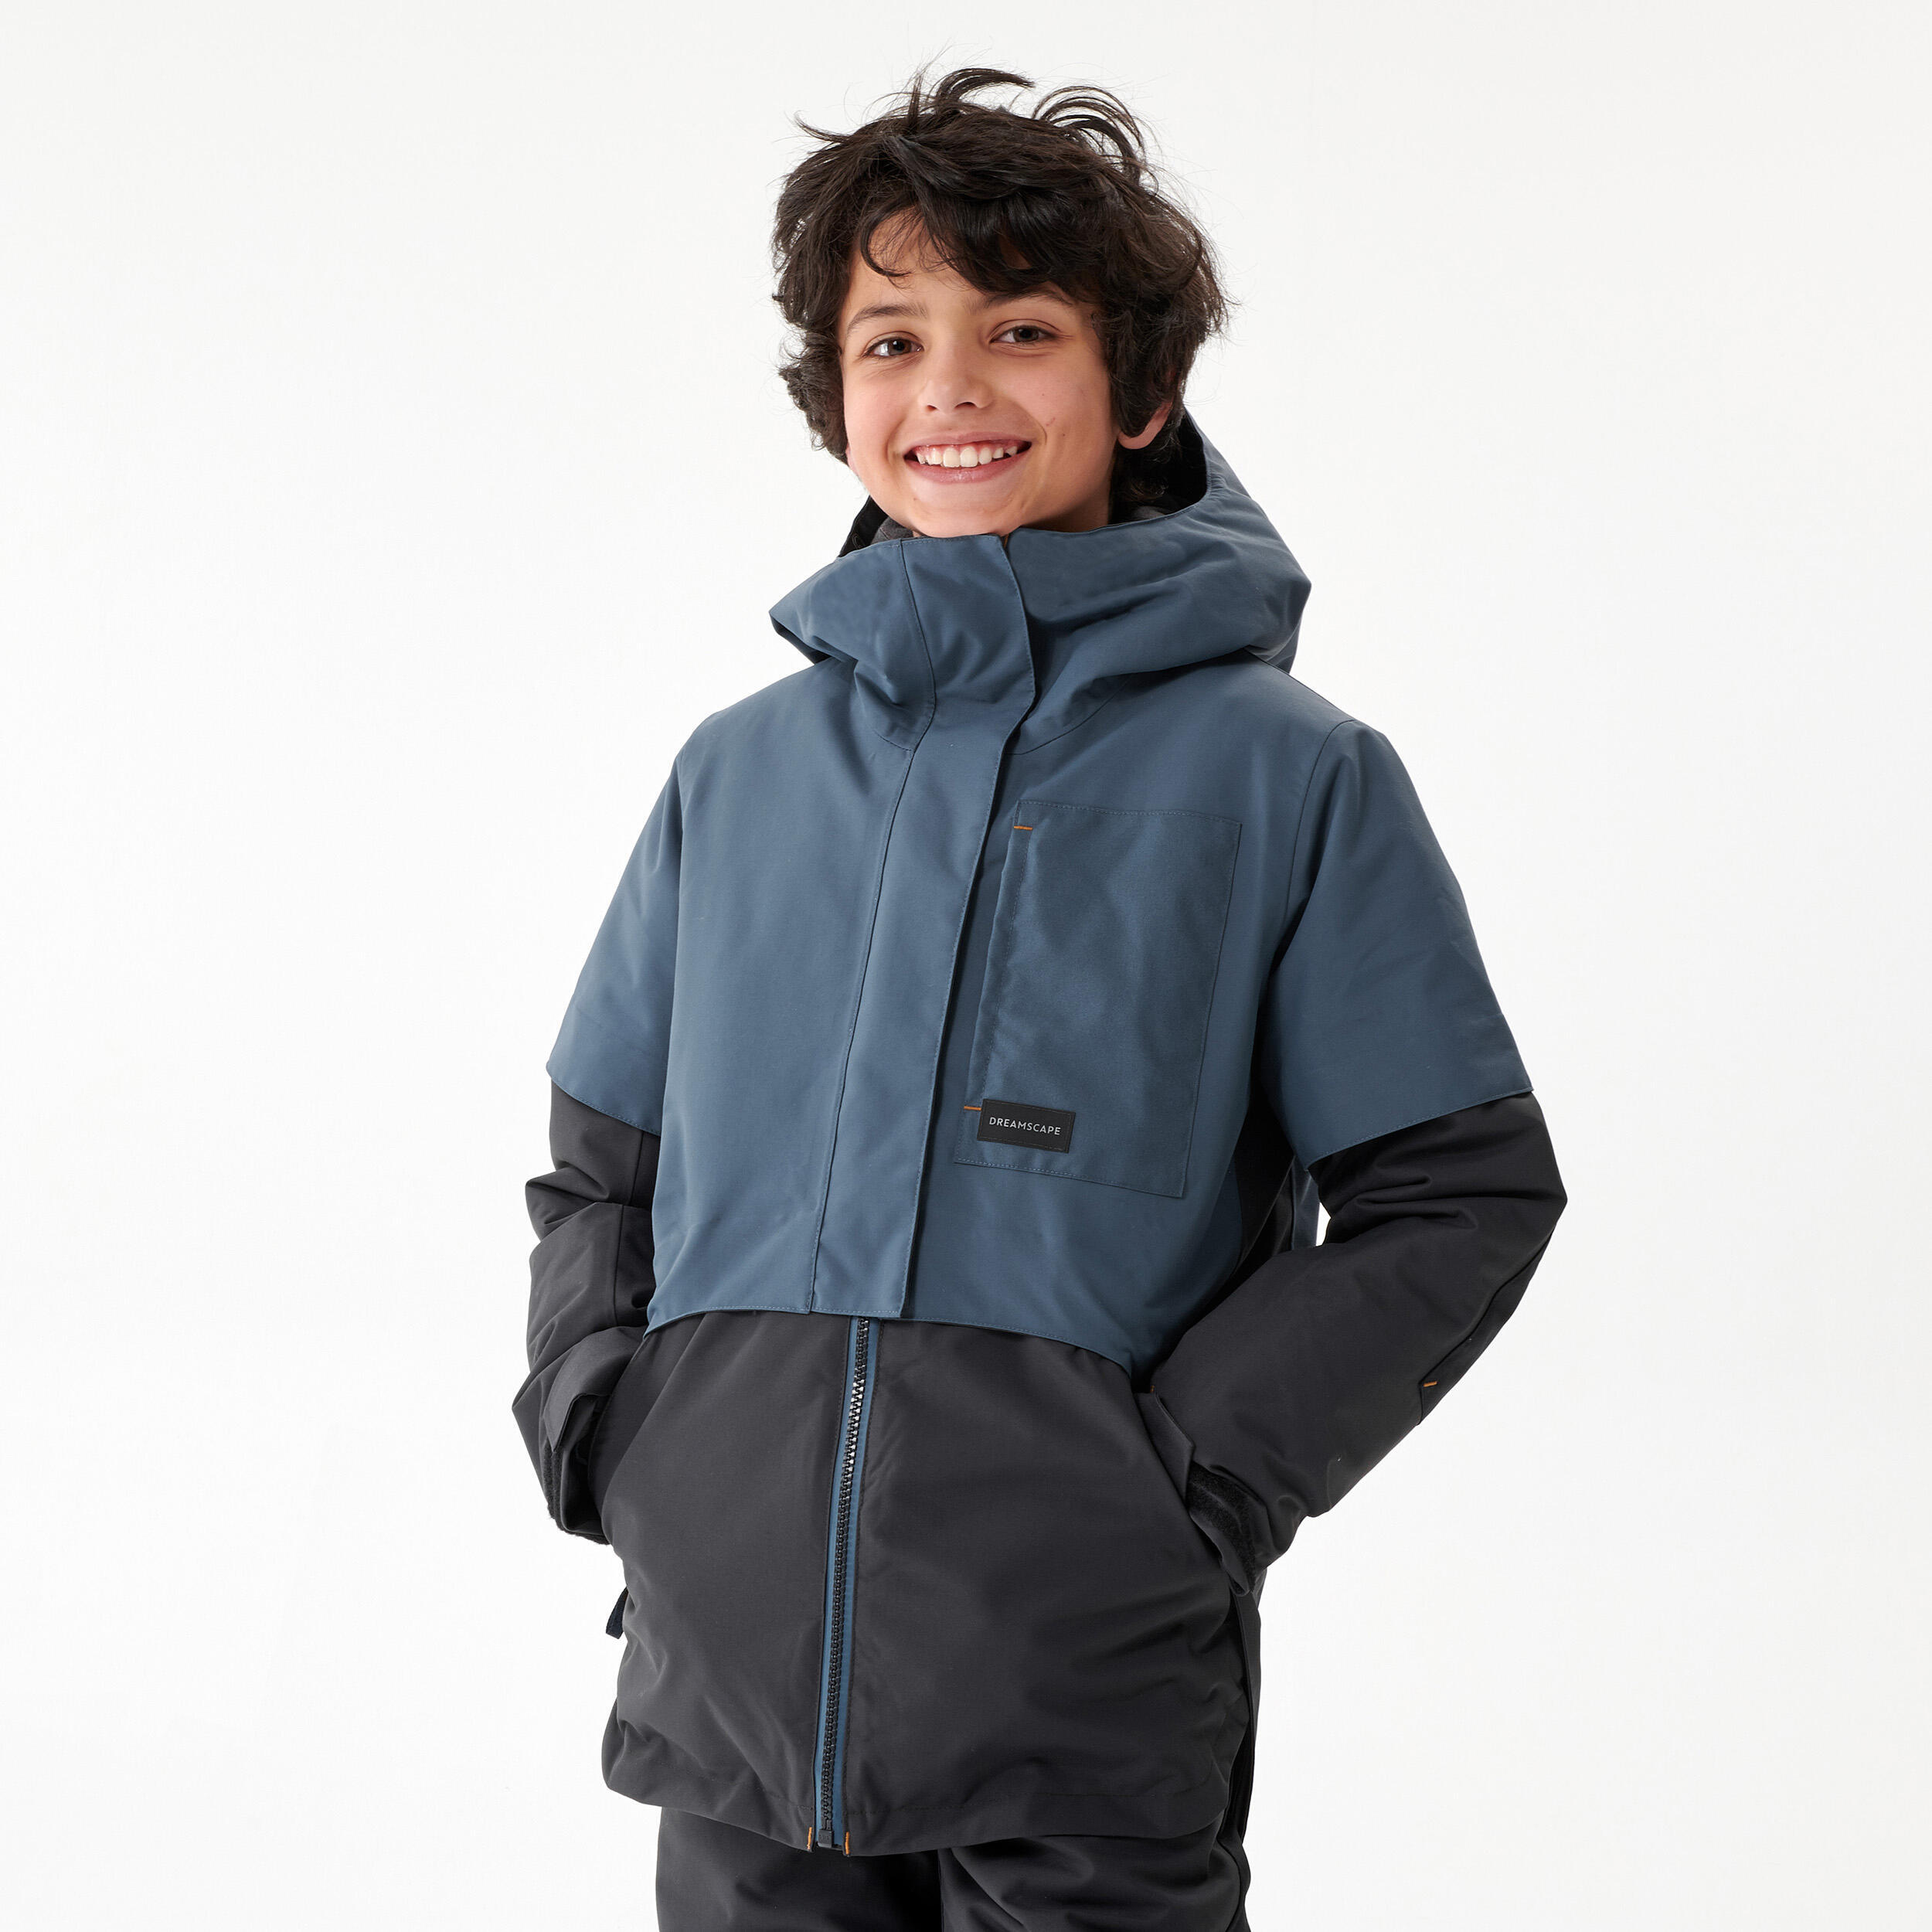 Kids’ Snowboard Jacket - SNB 500 Teen Boy - Blue 2/15